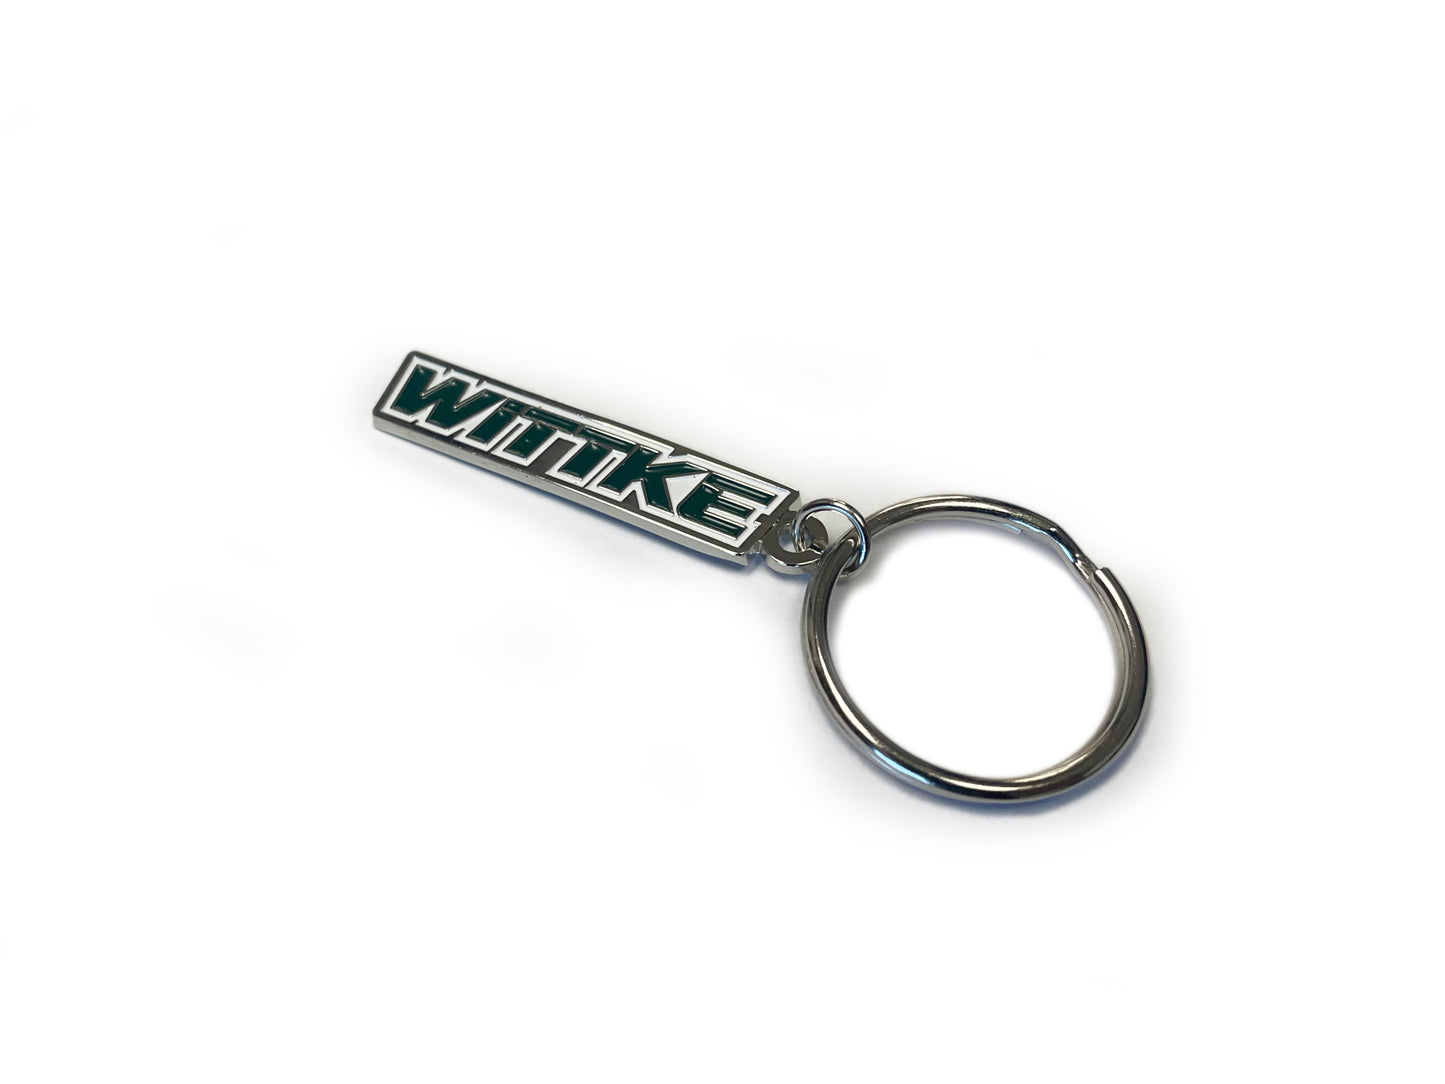 Porte-clés de marque Wittke